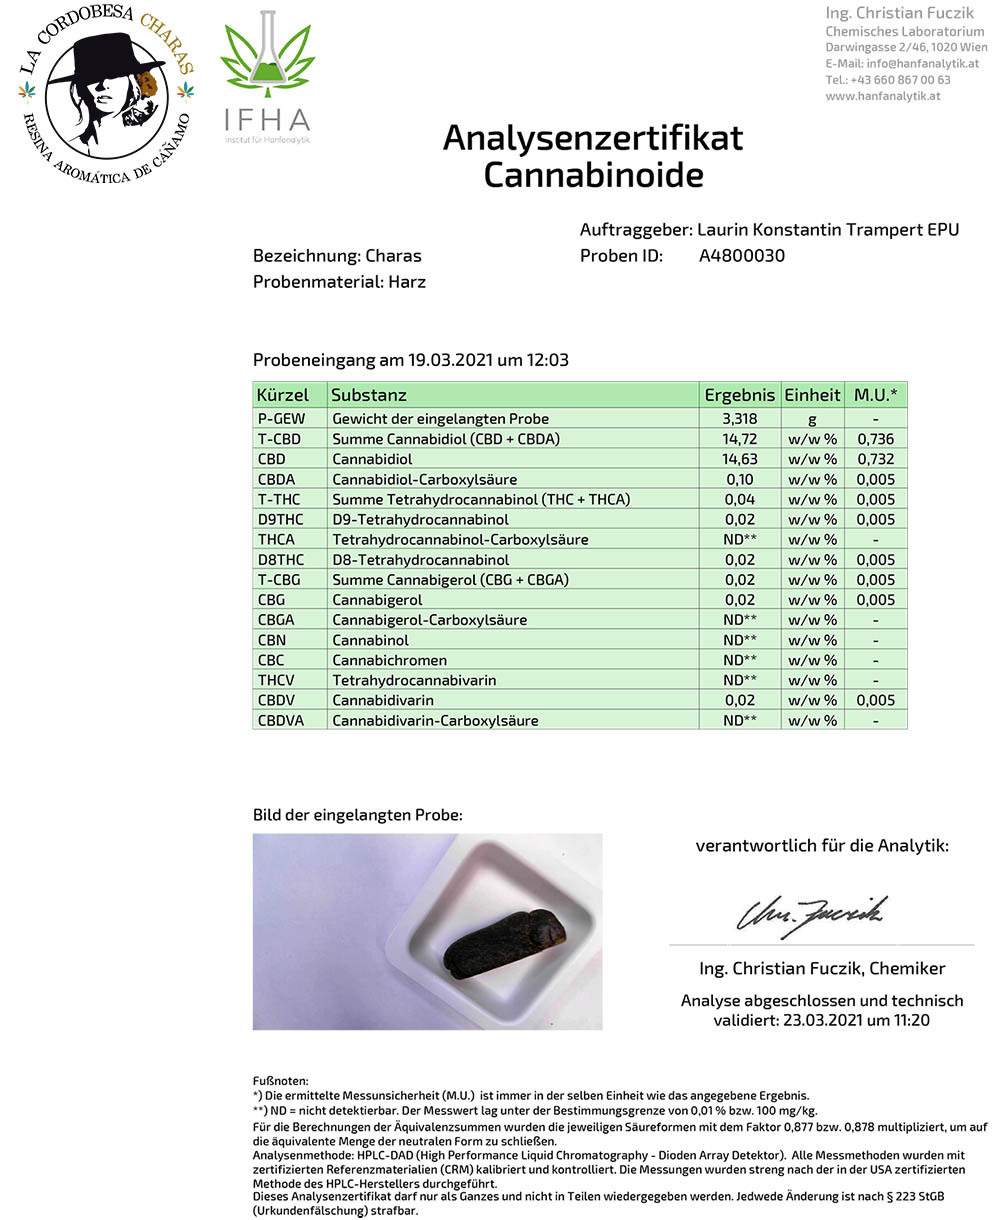 Hemp Charas OG Kush with 14.72% CBD · La Cordobesa hash ·